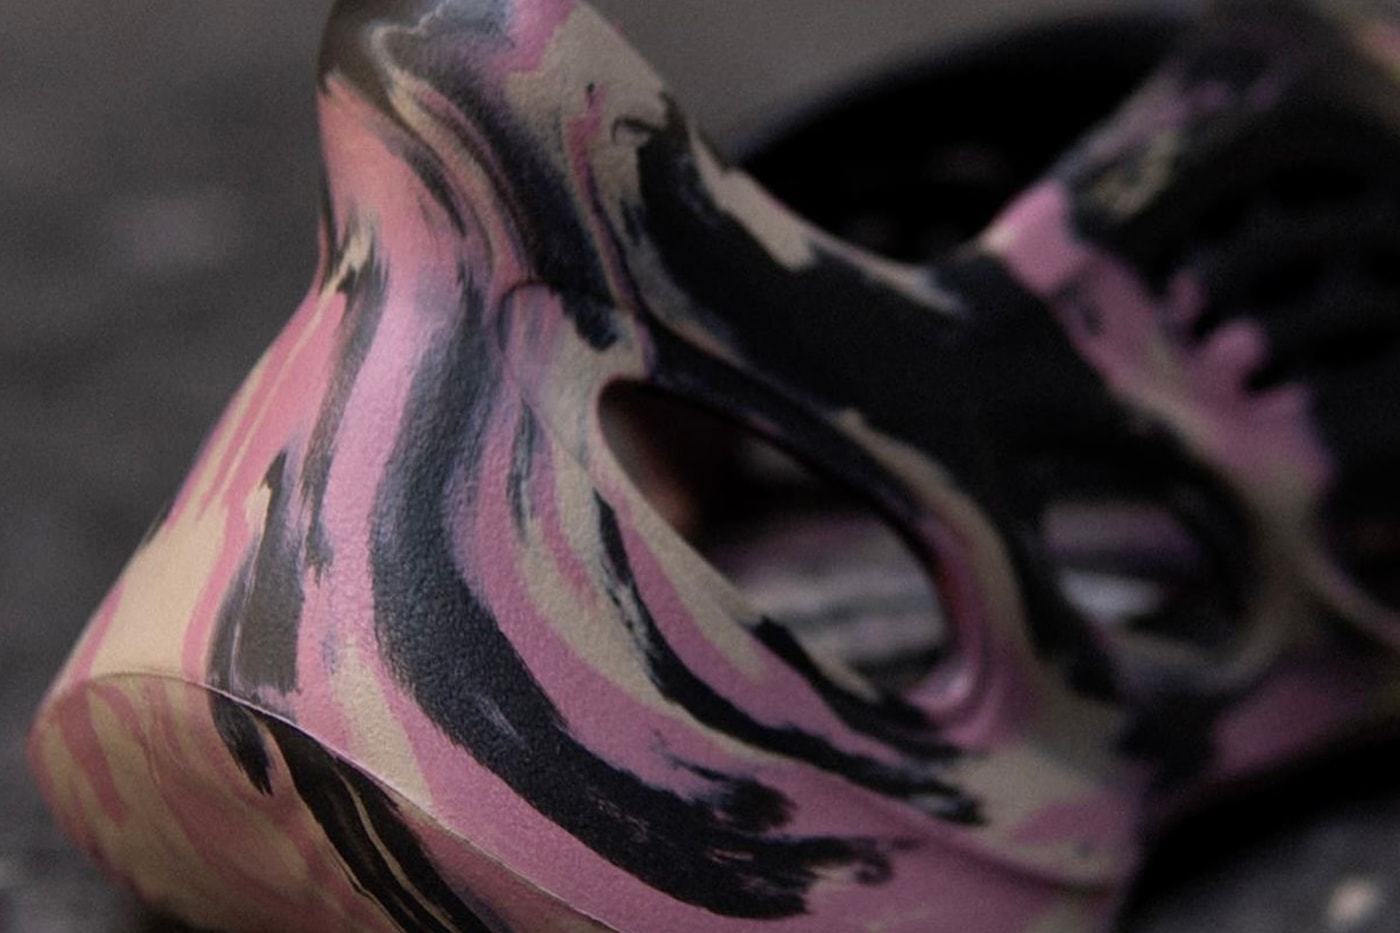 adidas YEEZY Foam Runner MX Carbon Closer Look Release Info Date Buy Price Kanye West